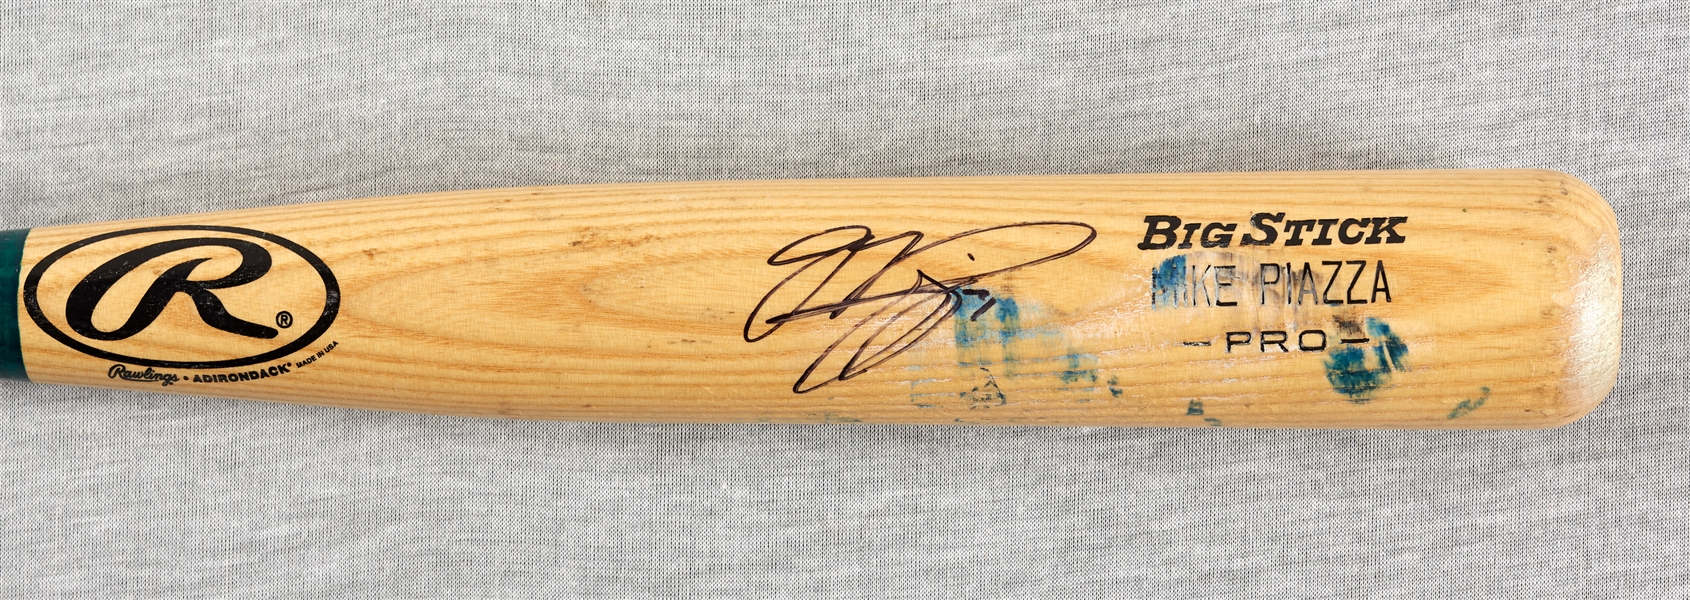 Mike Piazza 2007 BP-Used & Signed Rawlings Bat (BAS)